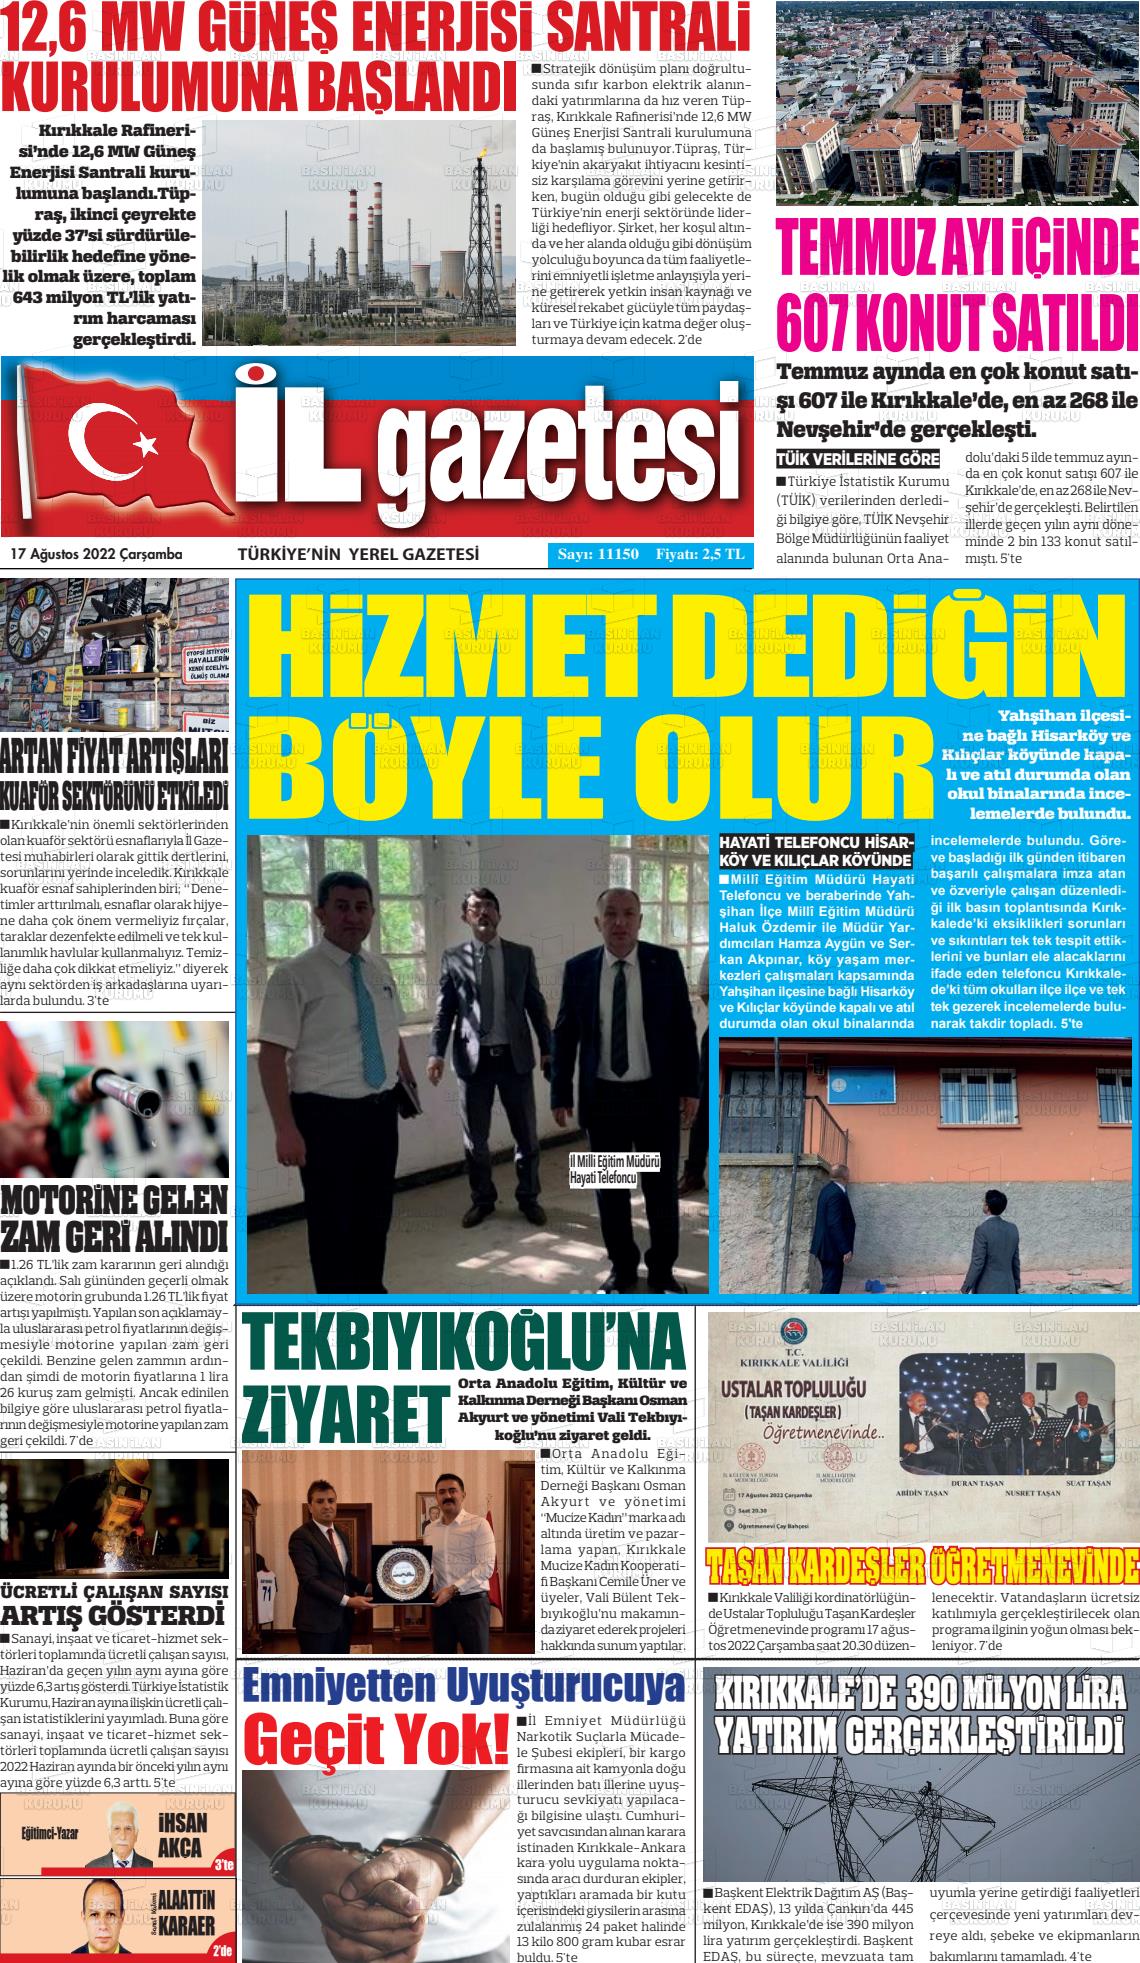 17 Ağustos 2022 Kırıkkale İl Gazete Manşeti